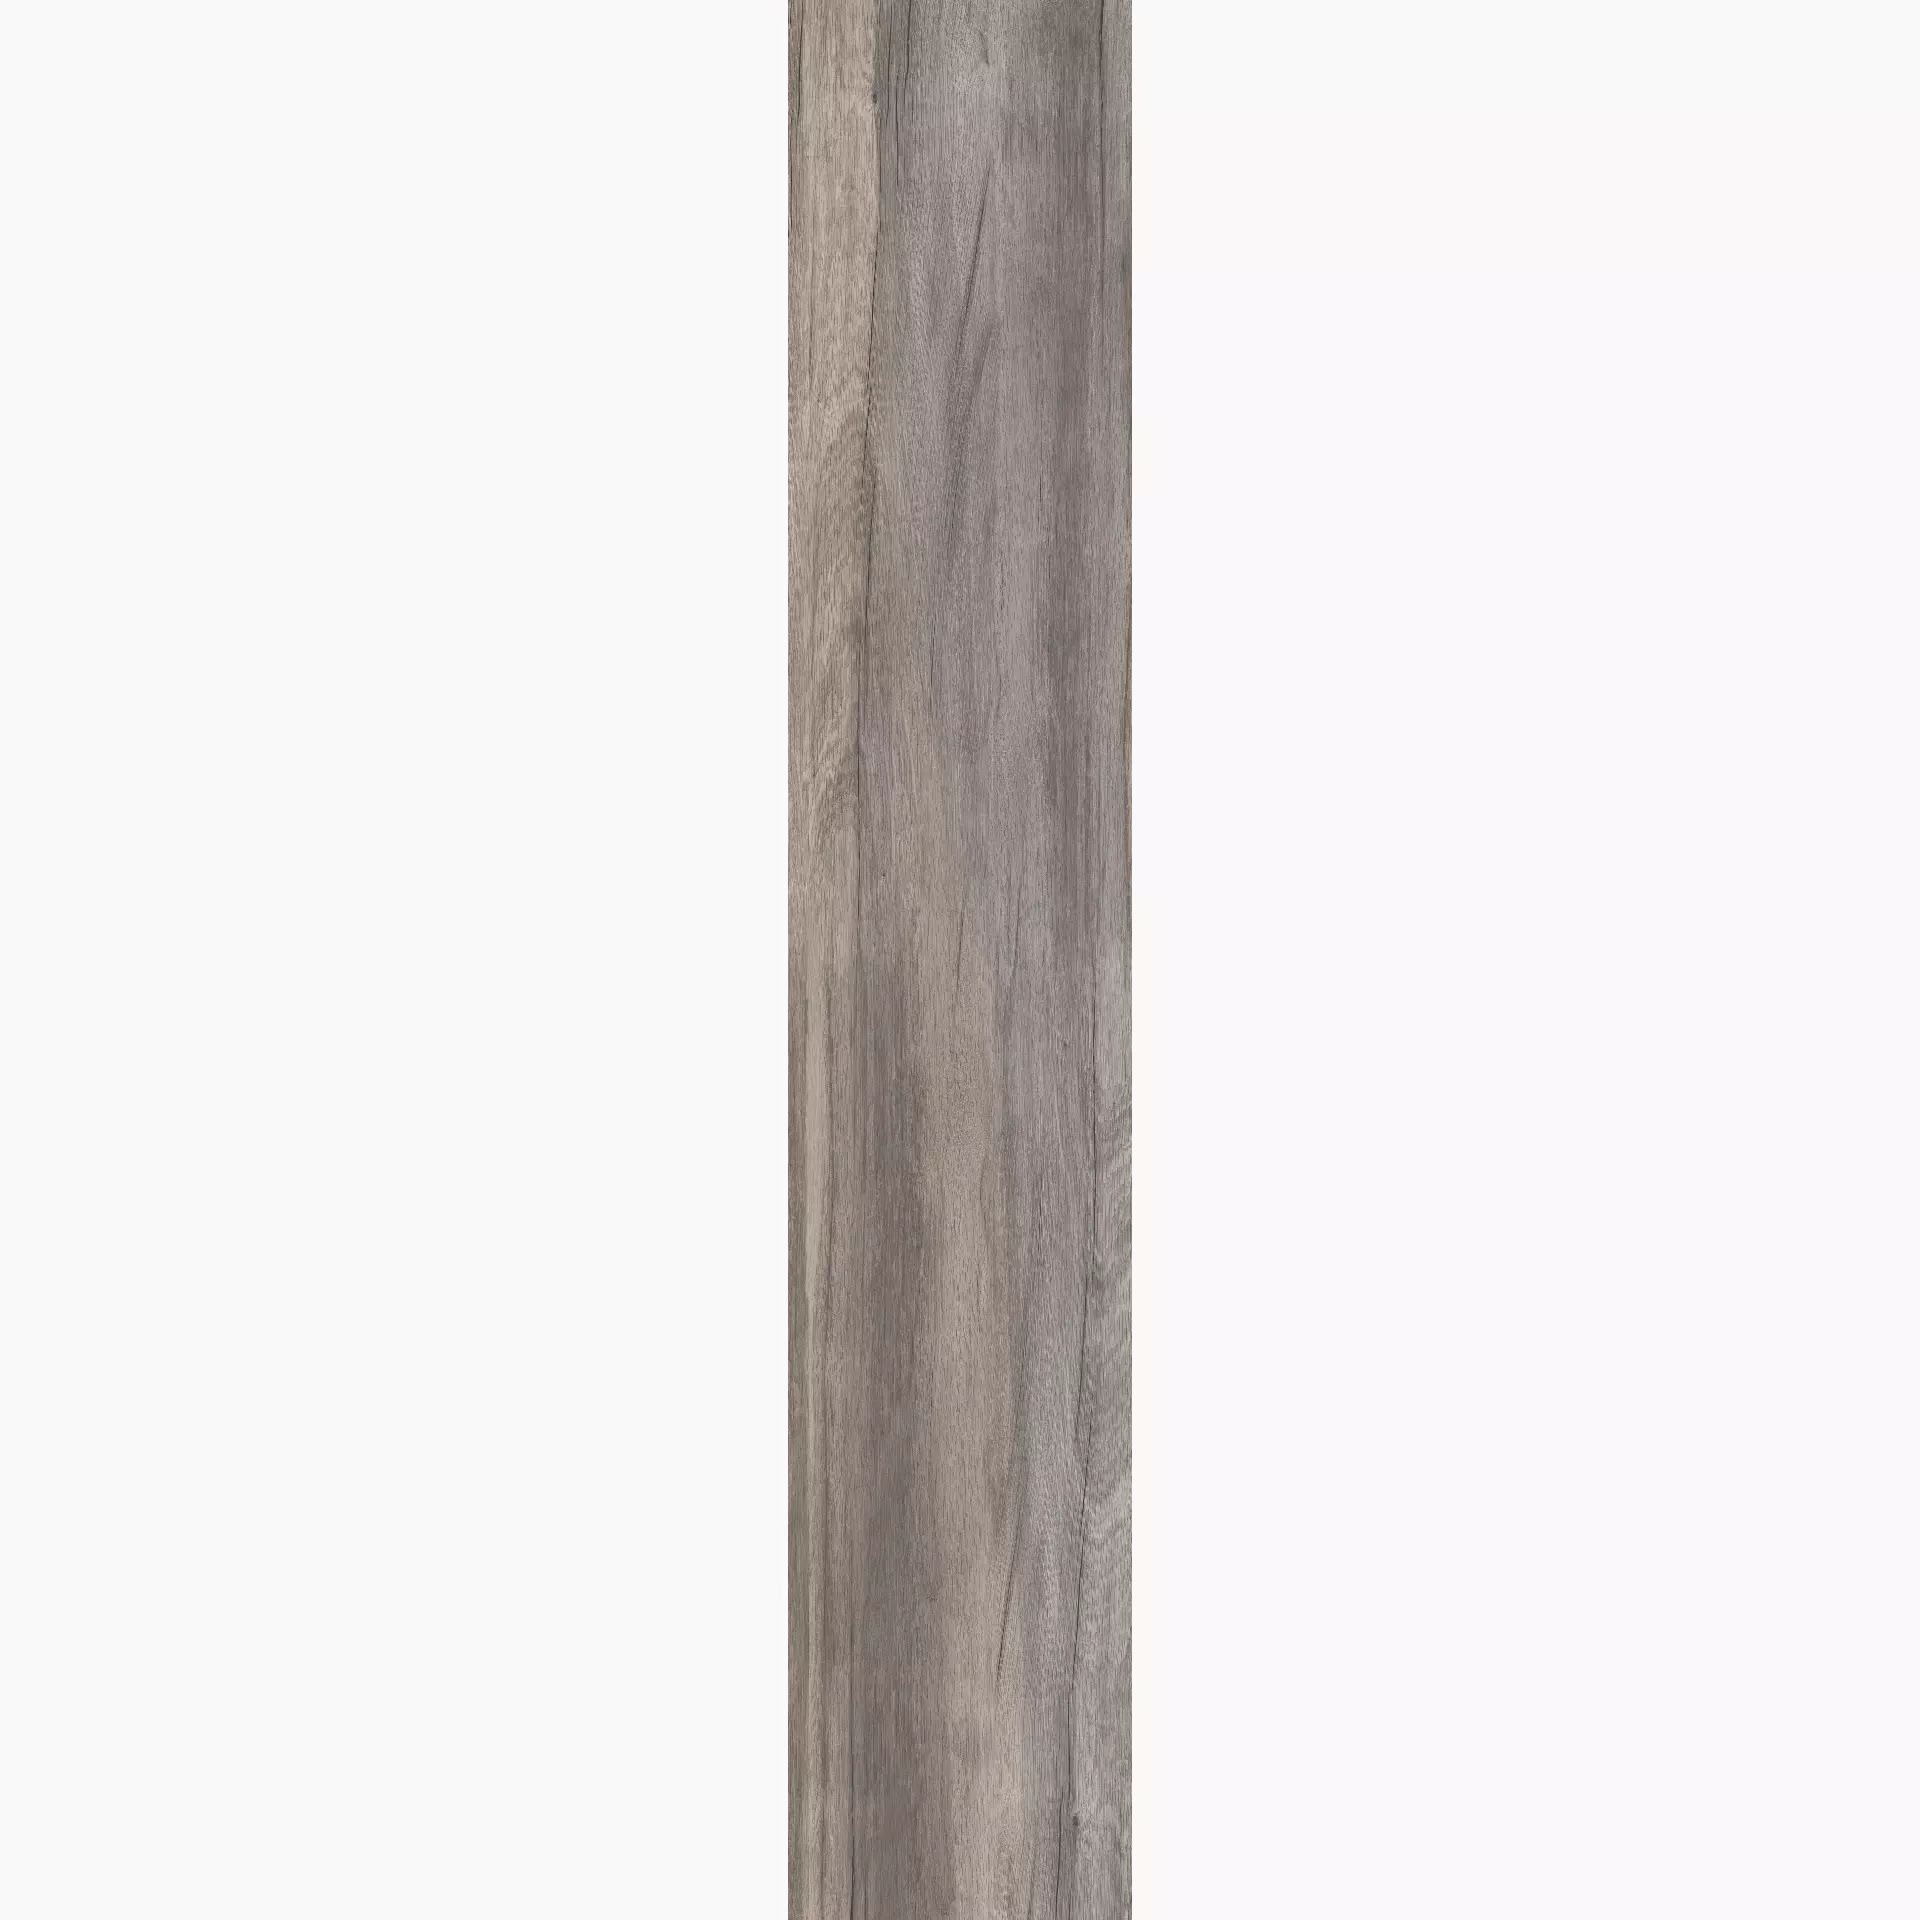 ABK Crossroad Wood Grey Naturale PF60000559 20x120cm rectified 8,5mm